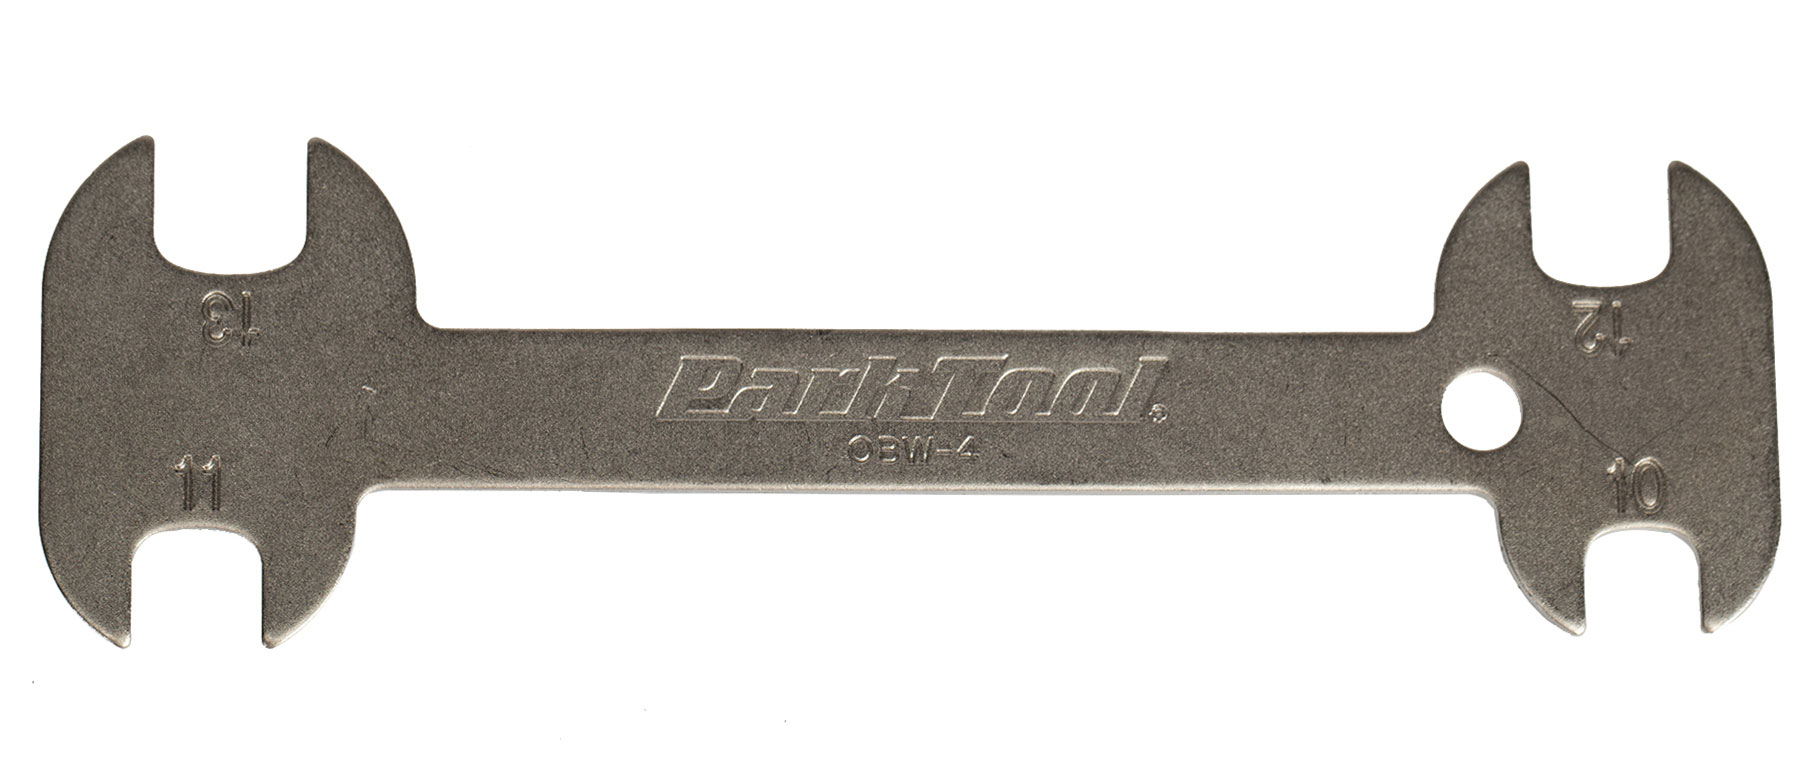 Park Tool OBW-4 Offset Brake Wrench